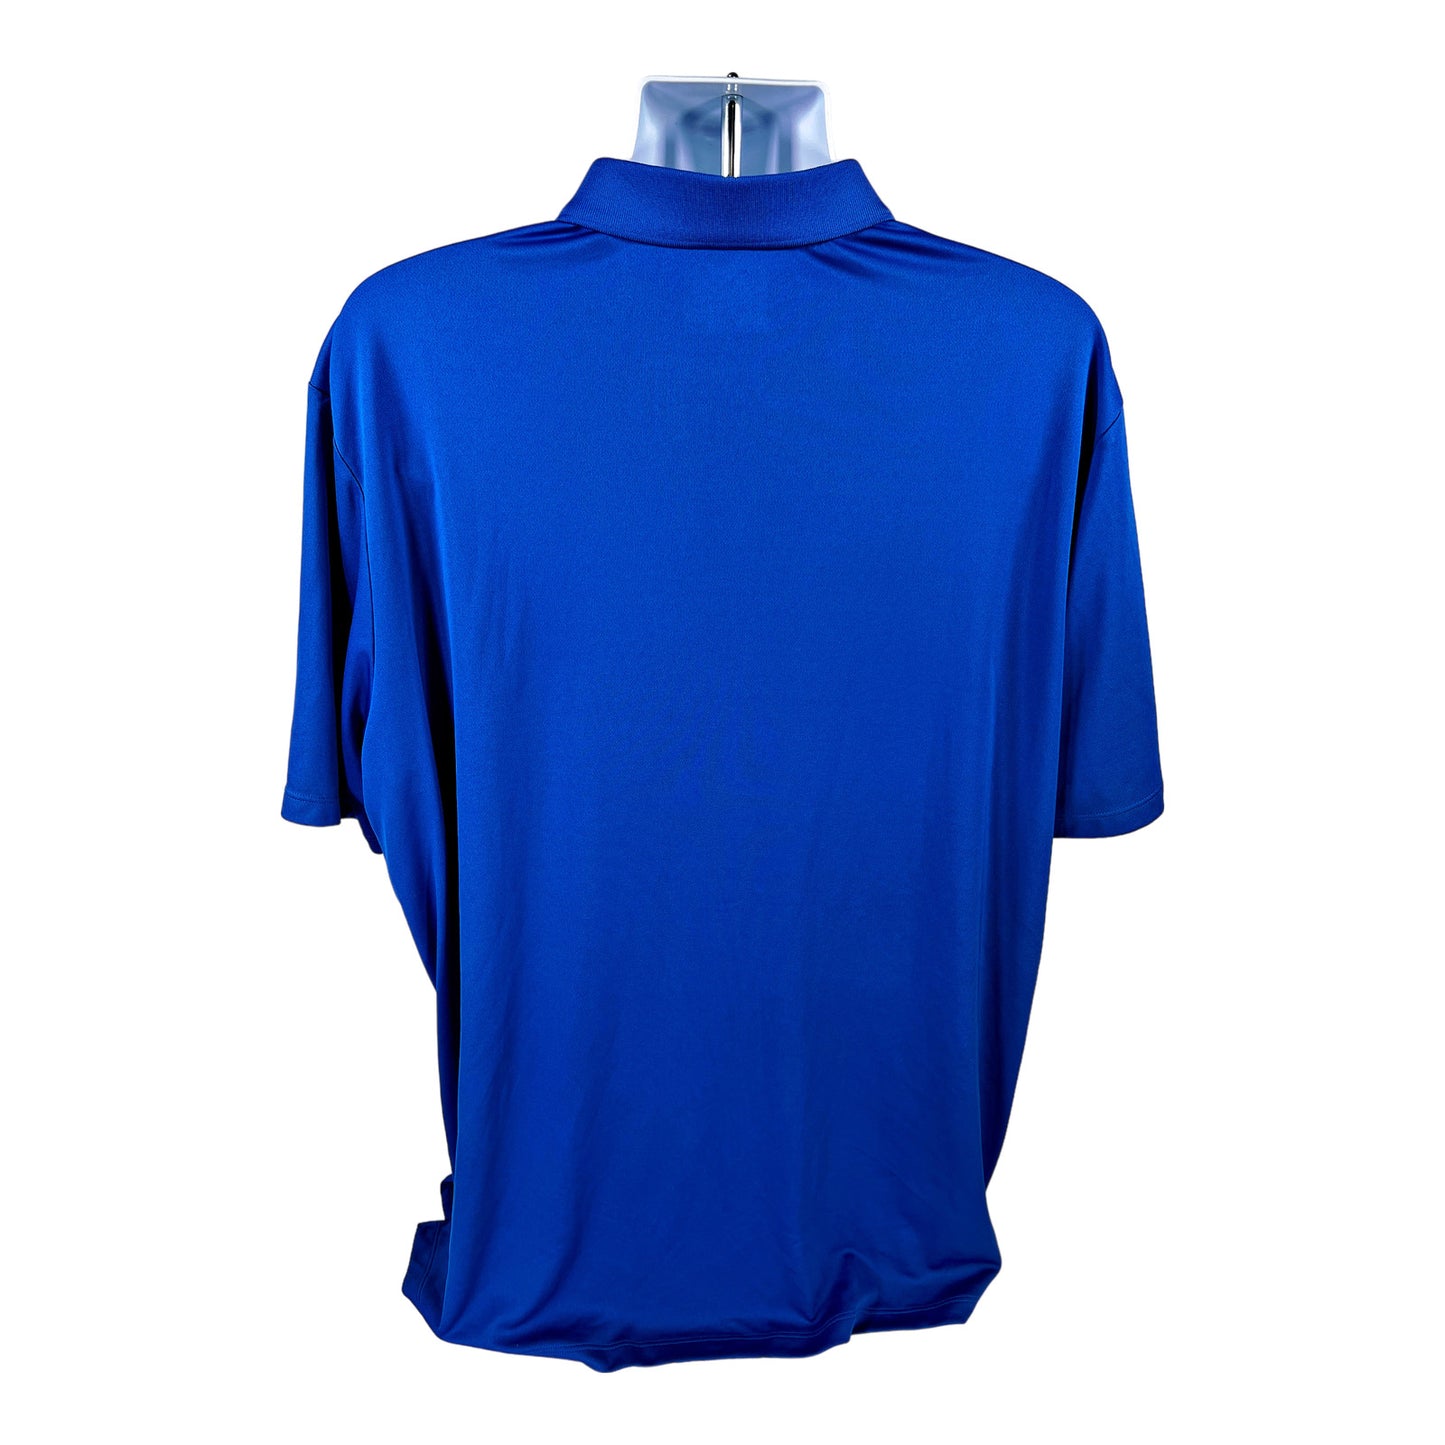 Adidas Men’s Blue Short Sleeve Climacool Golf Polo - 2XL